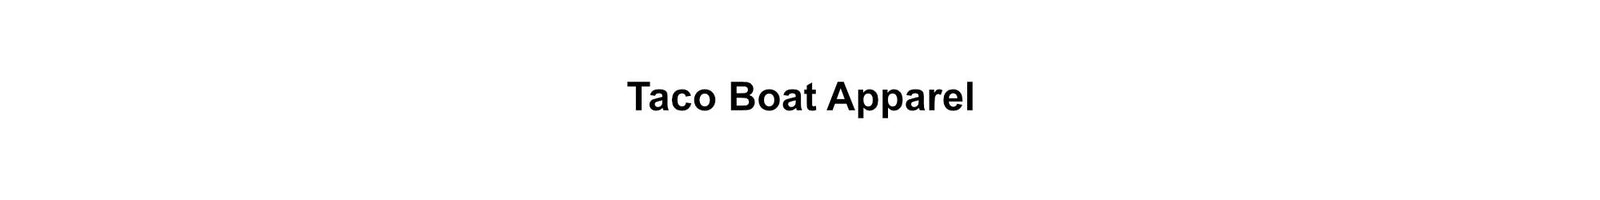 Taco Boat Apparel